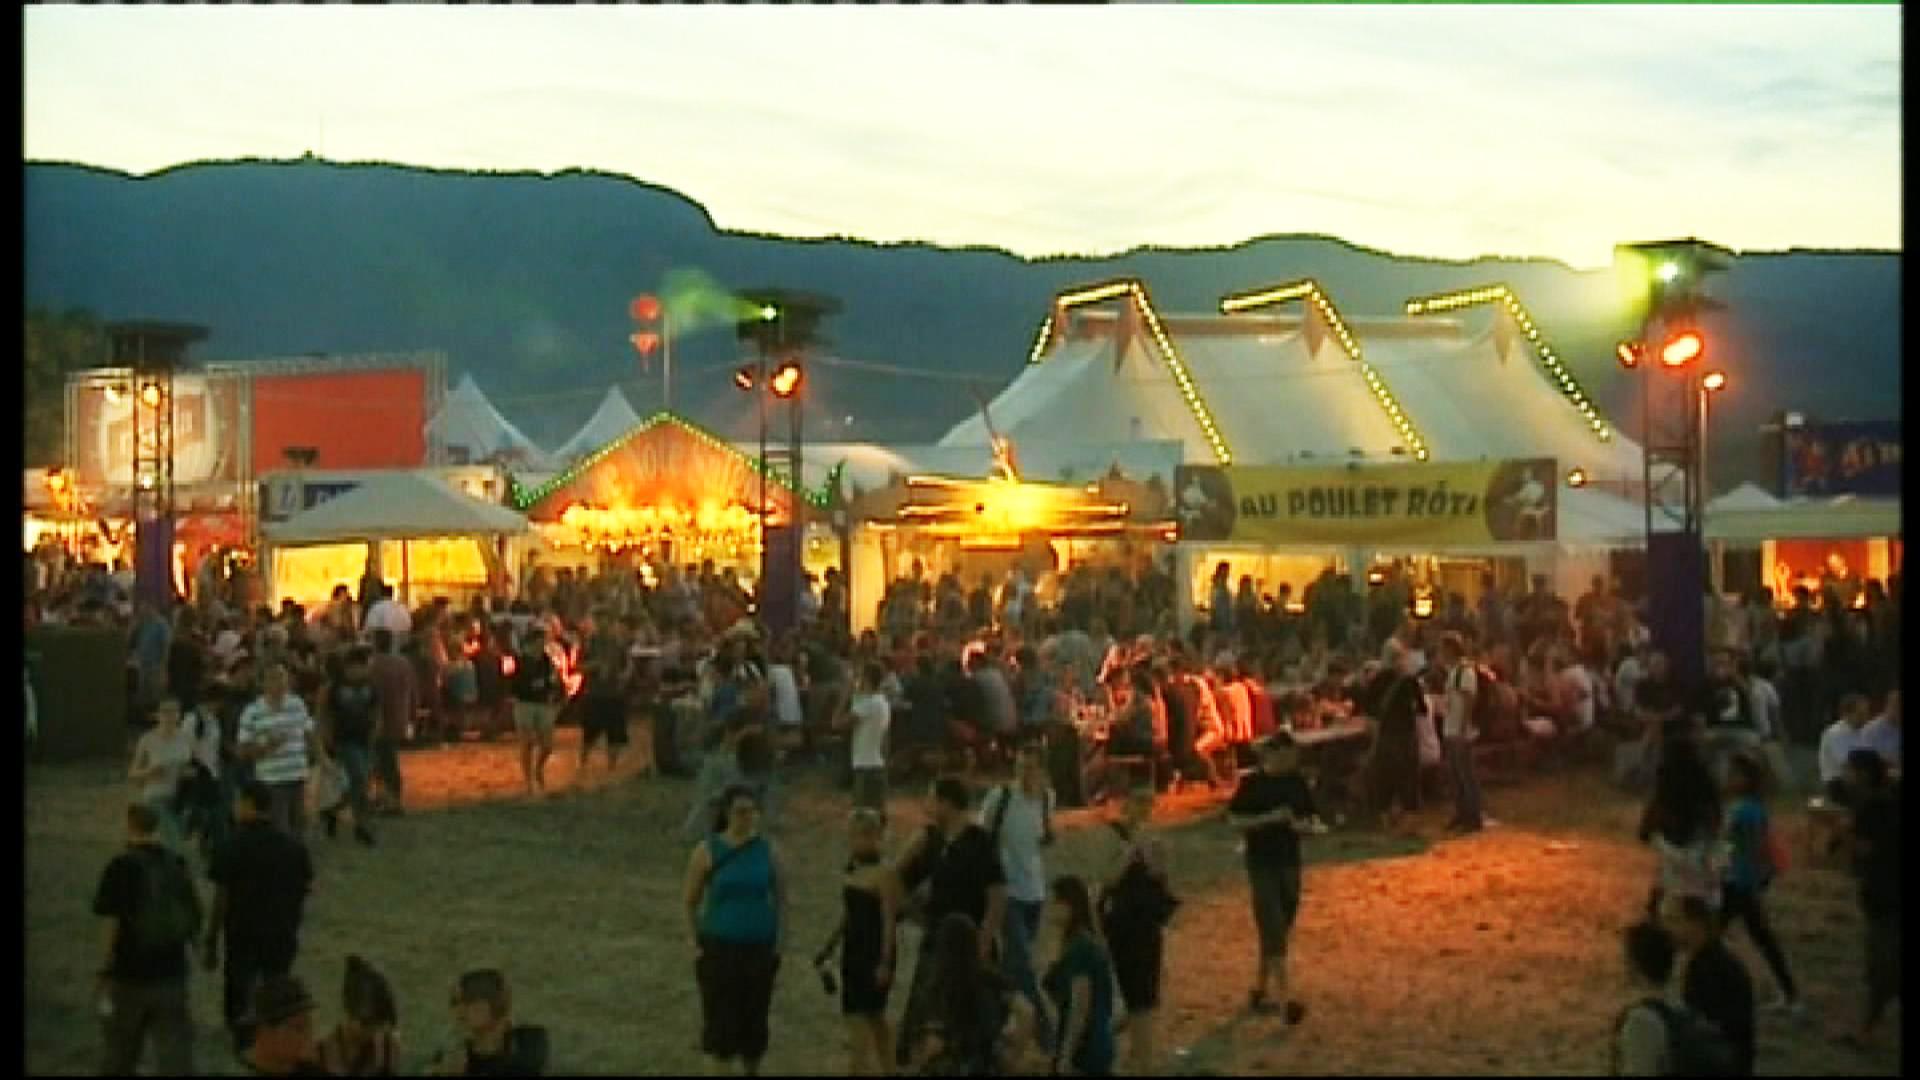 Switzerland’s biggest open air festival Paléo